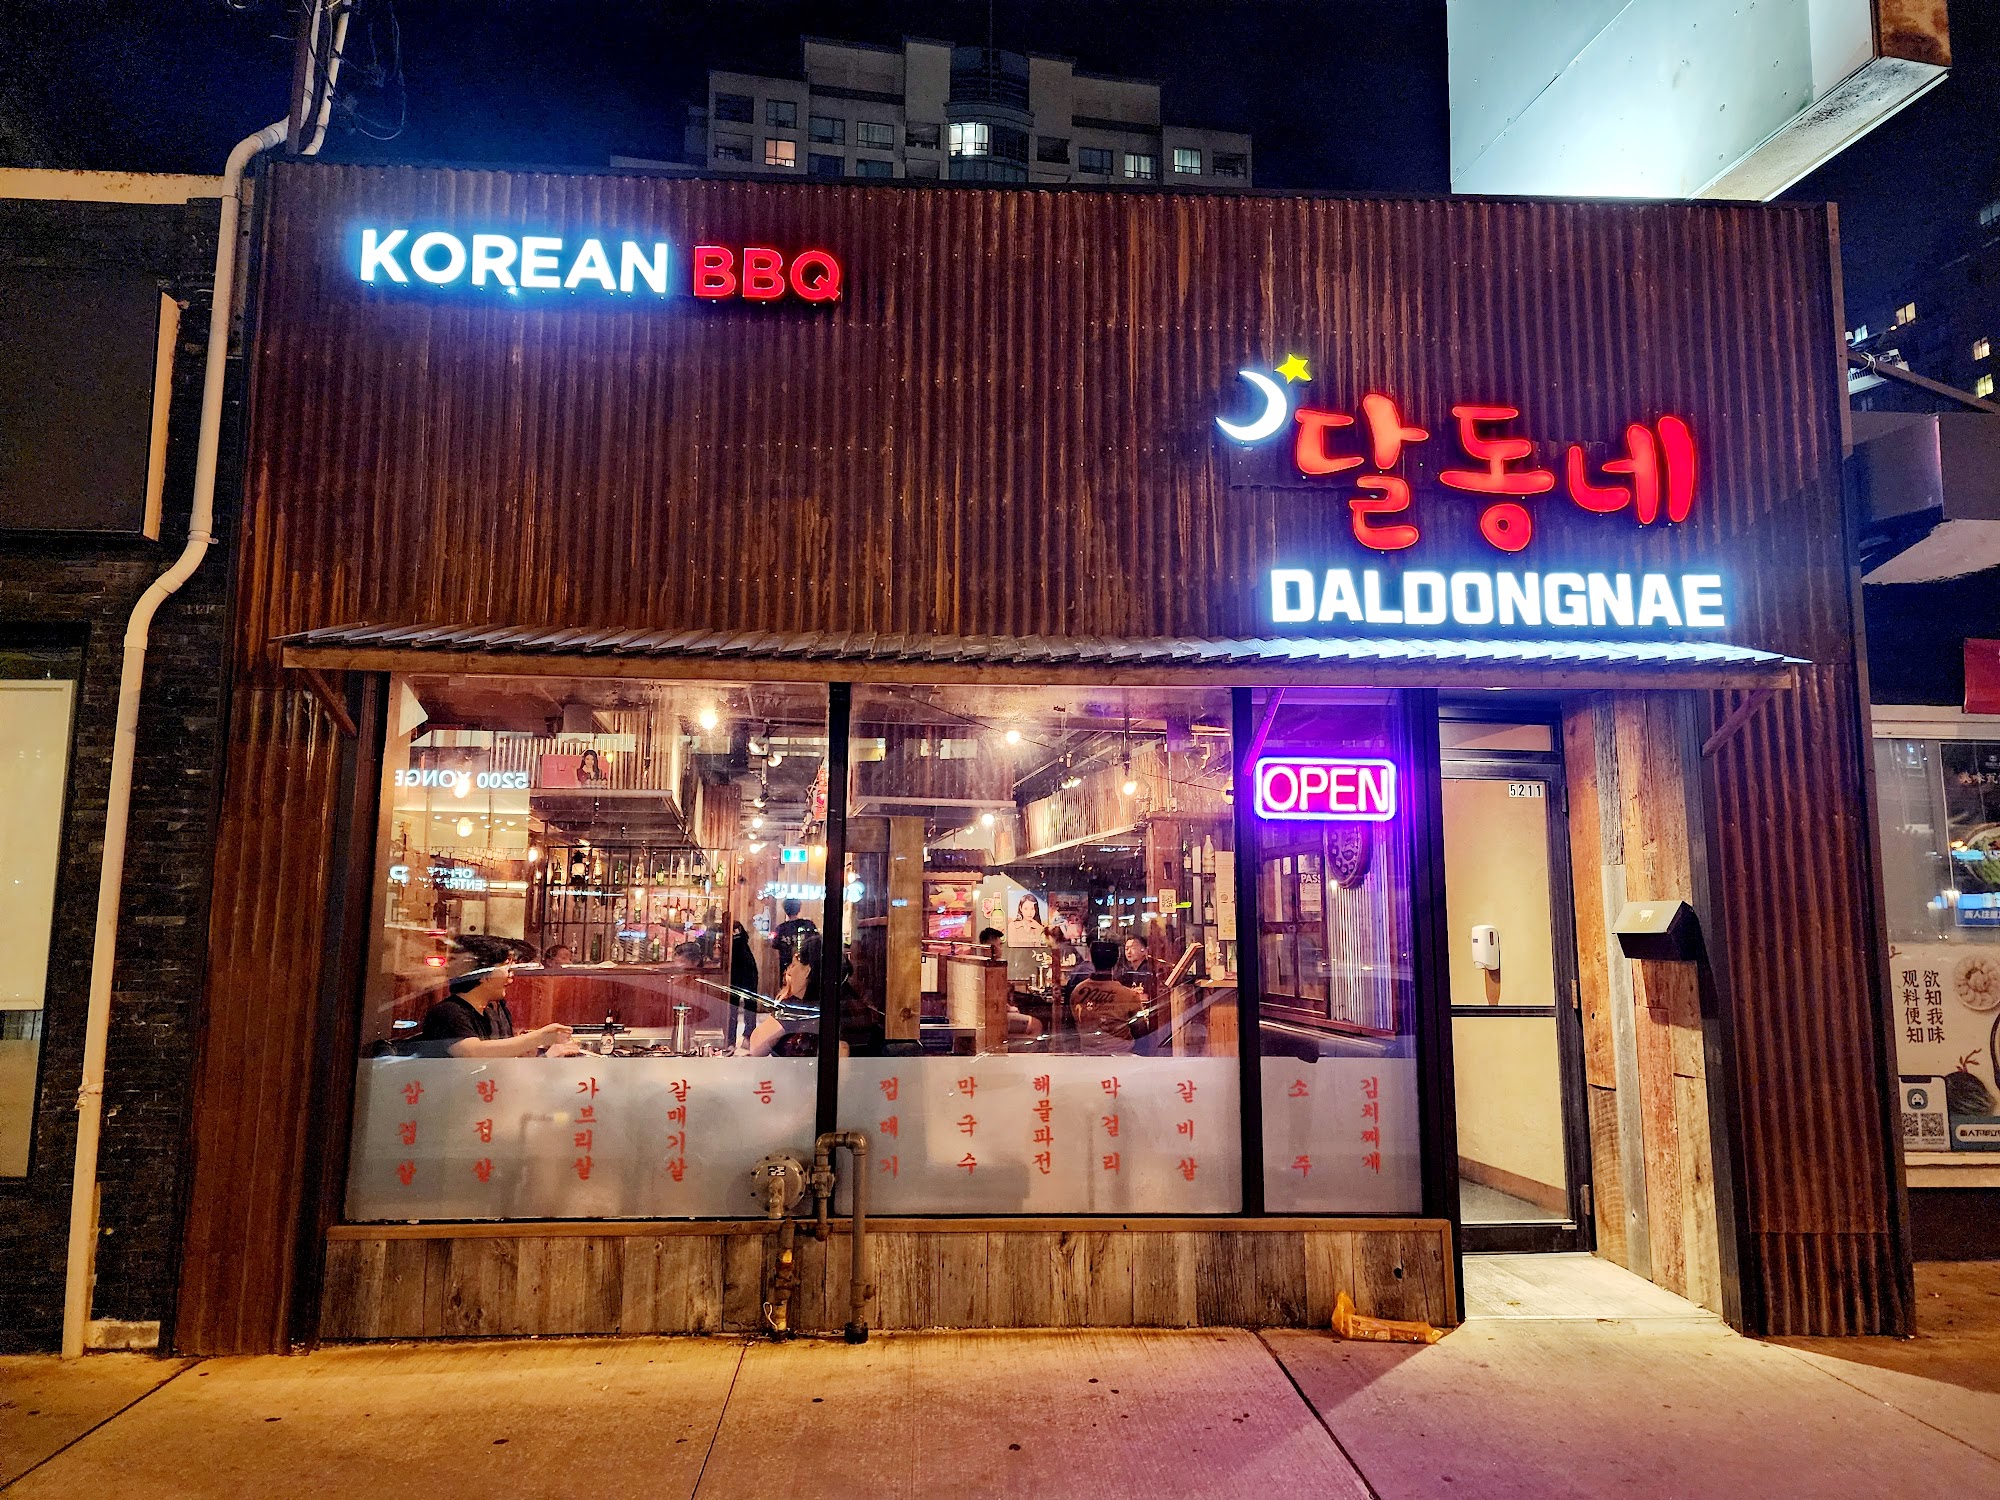 Daldongnae Korean BBQ (Empress)